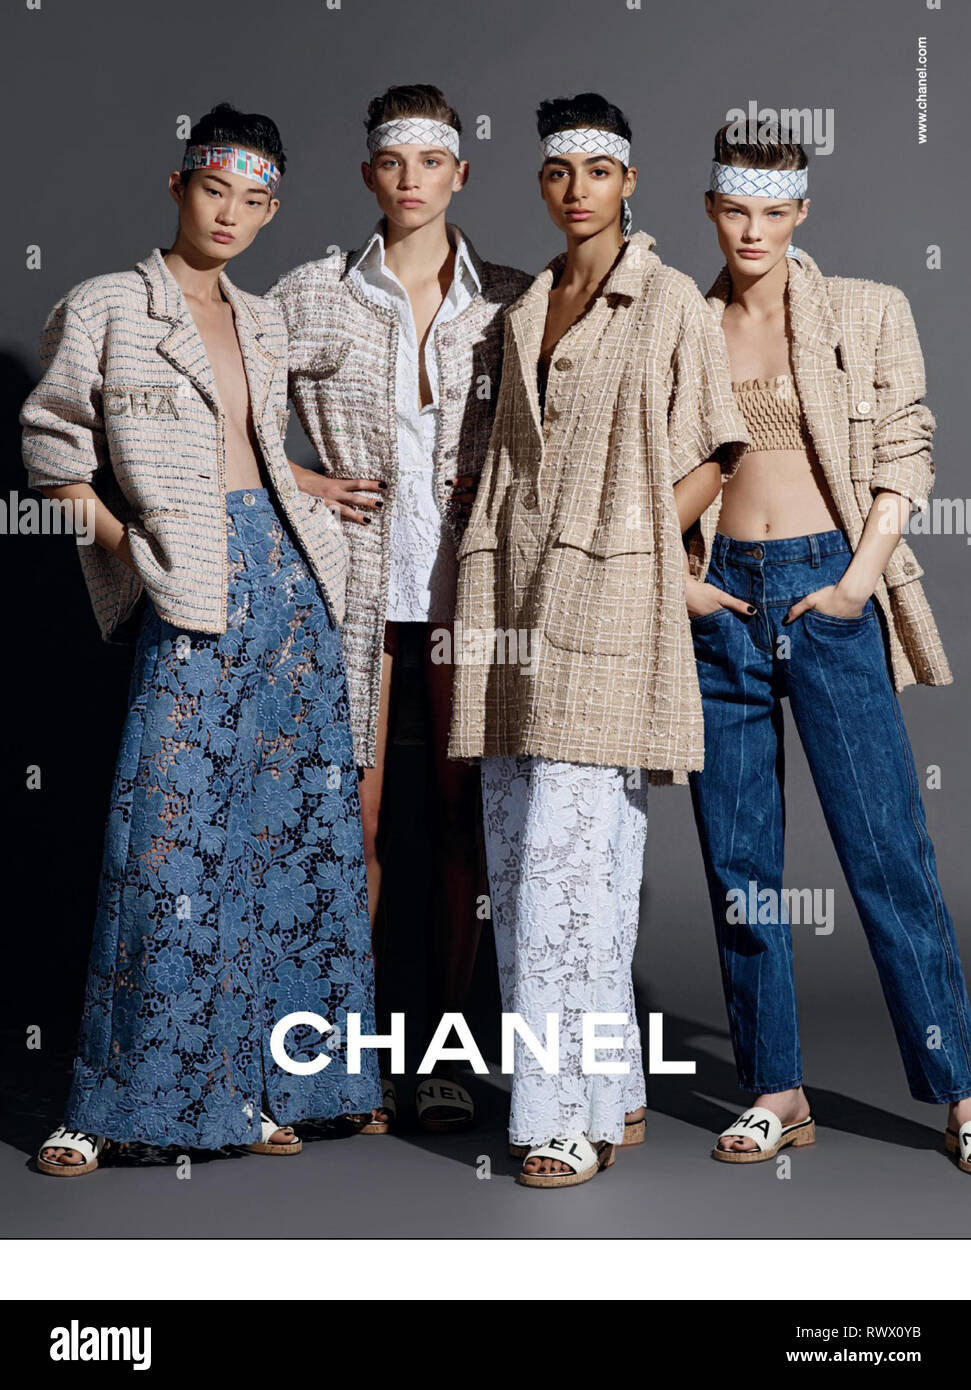 2010s UK Chanel Magazine Advert Stock Photo